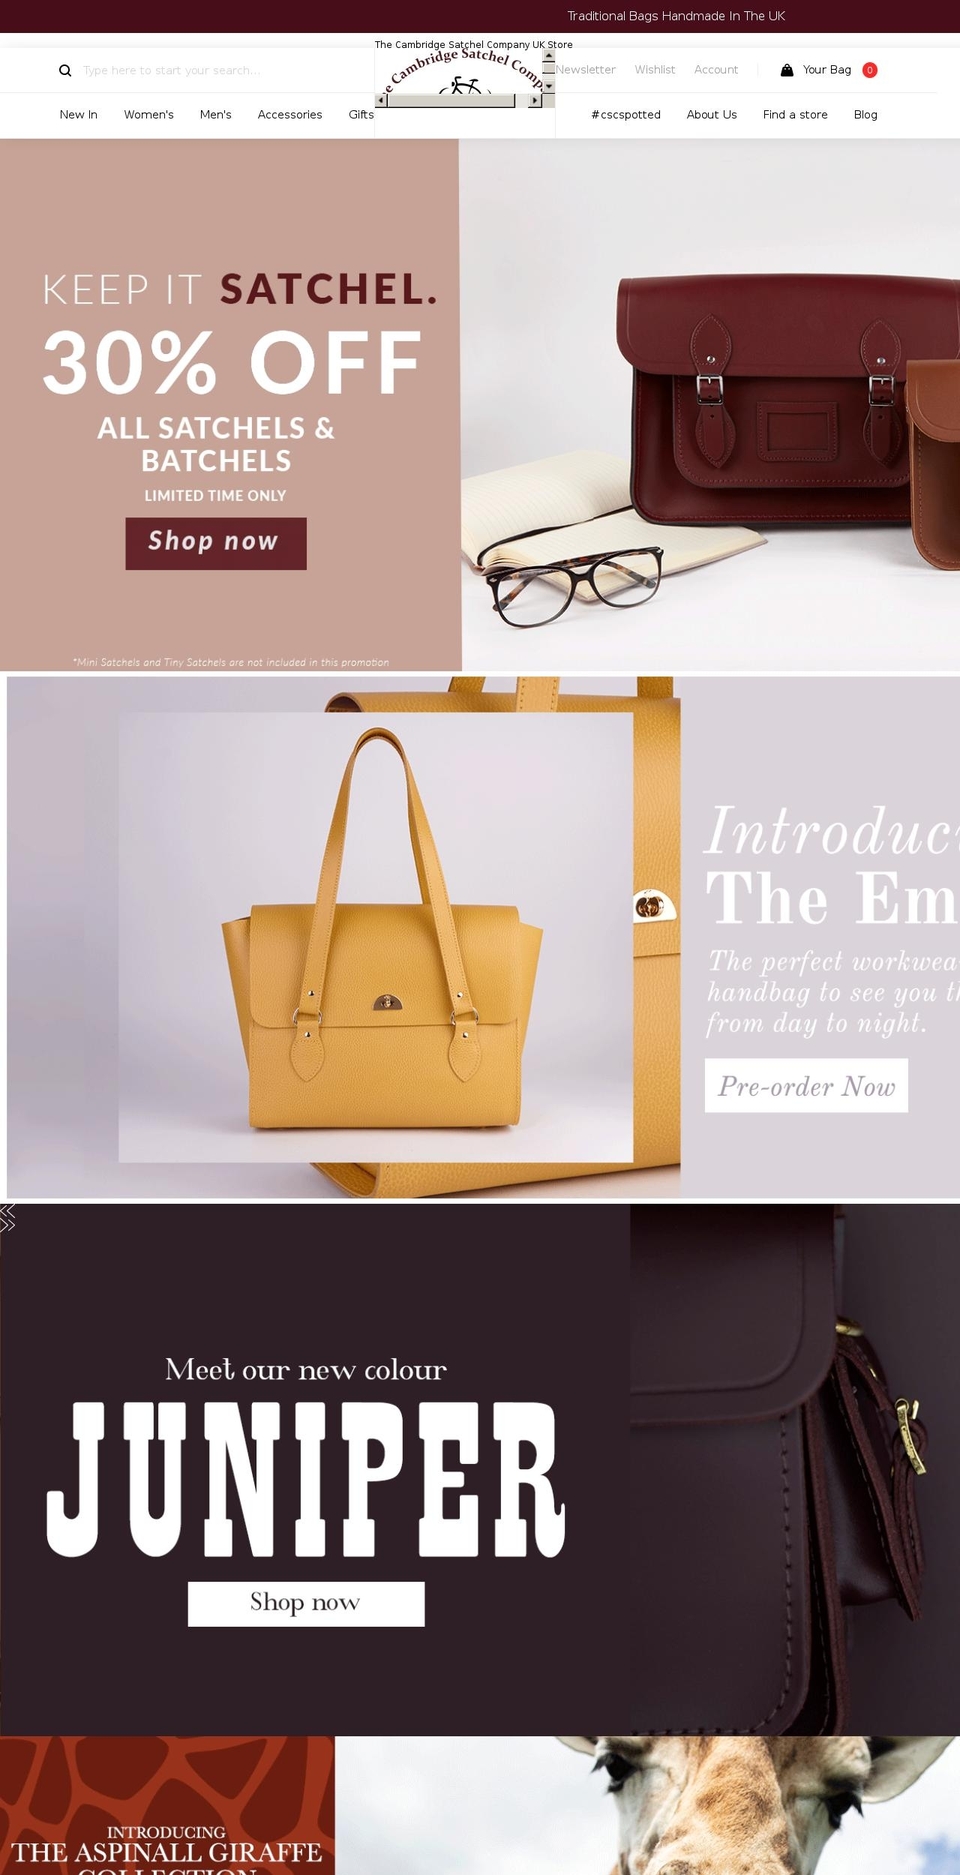 cambridge-satchel-company.biz shopify website screenshot